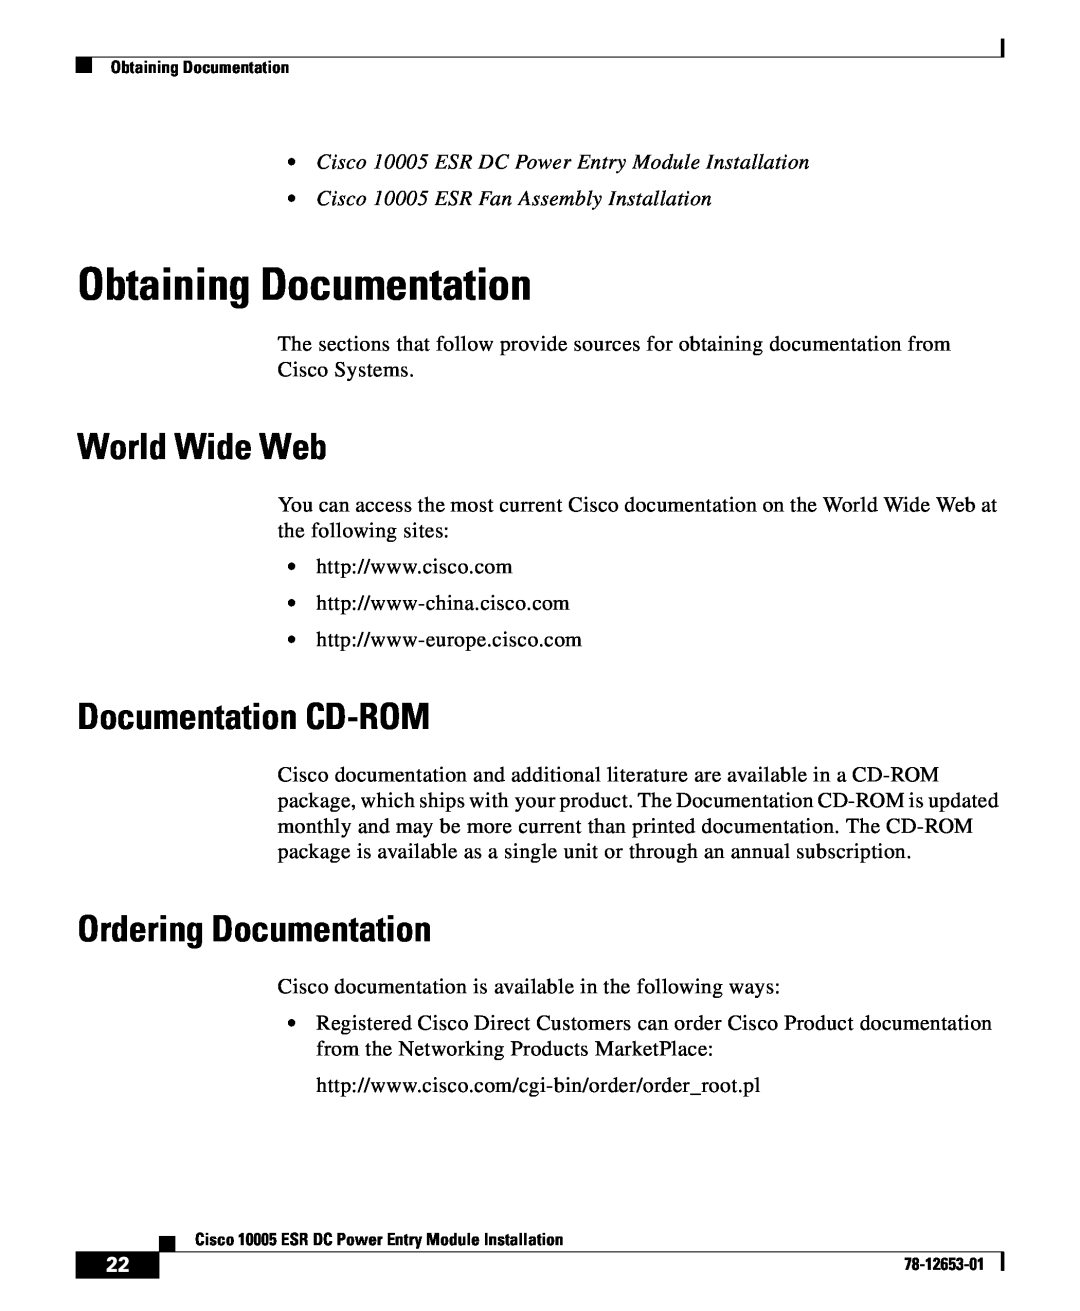 Cisco Systems Cisco 10005 ESR manual Obtaining Documentation, World Wide Web, Documentation CD-ROM, Ordering Documentation 